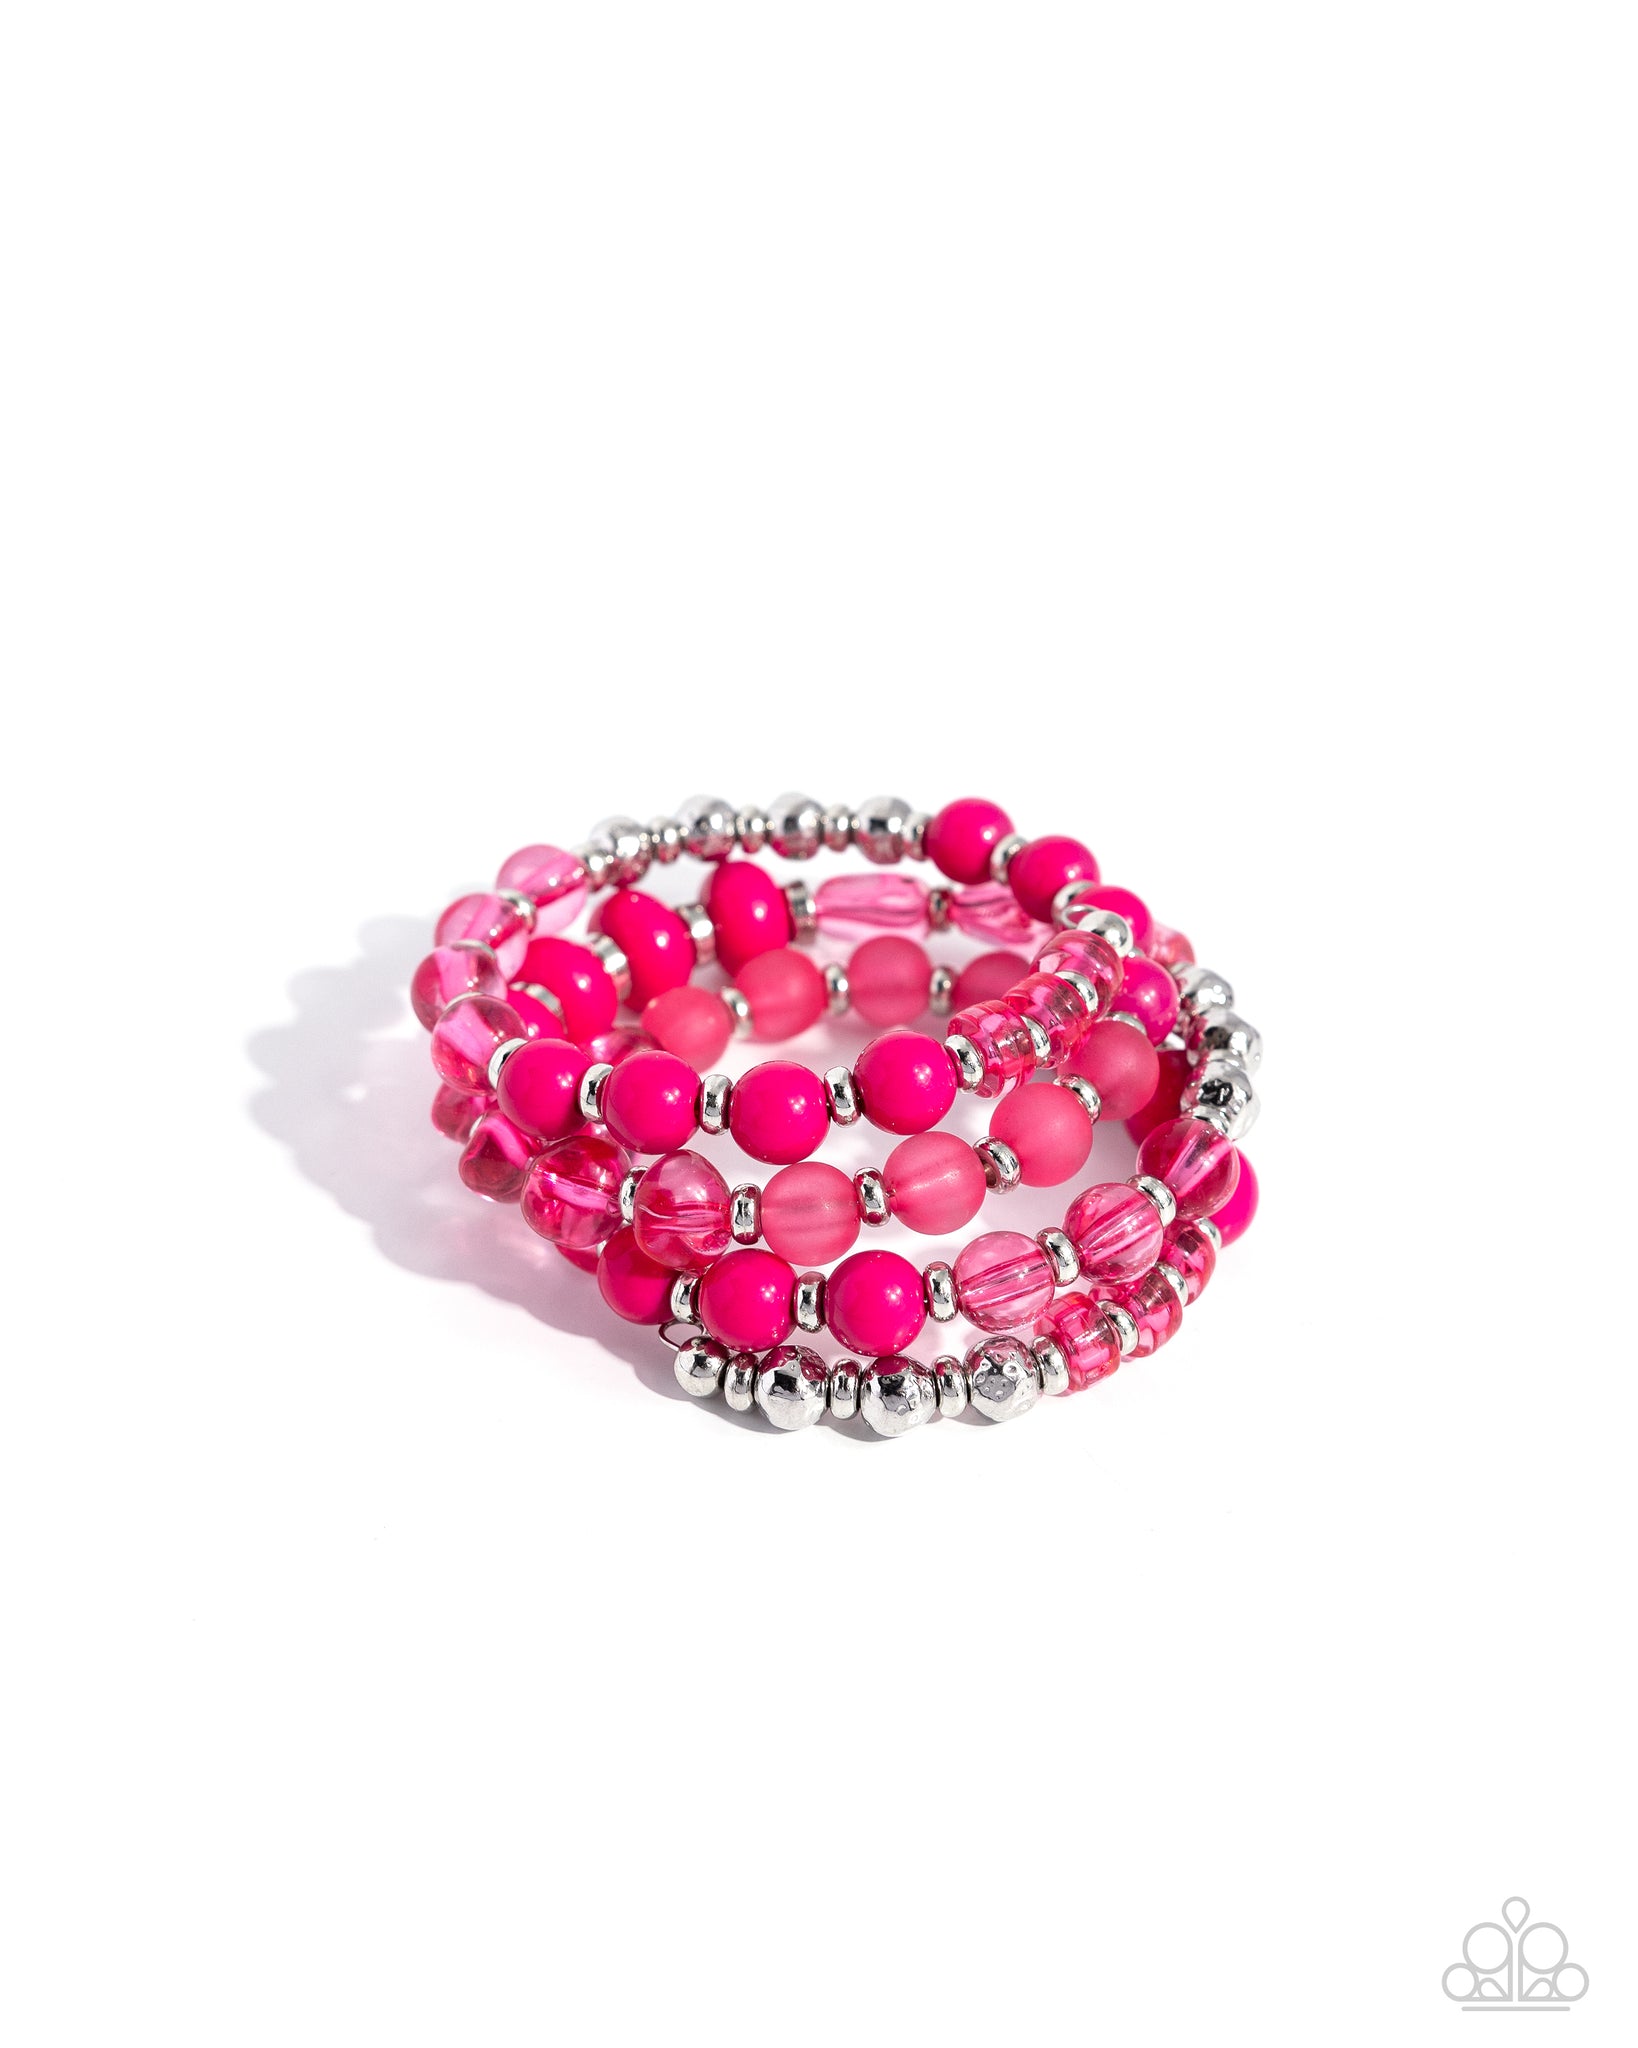 Colorful Charade Pink Bracelet